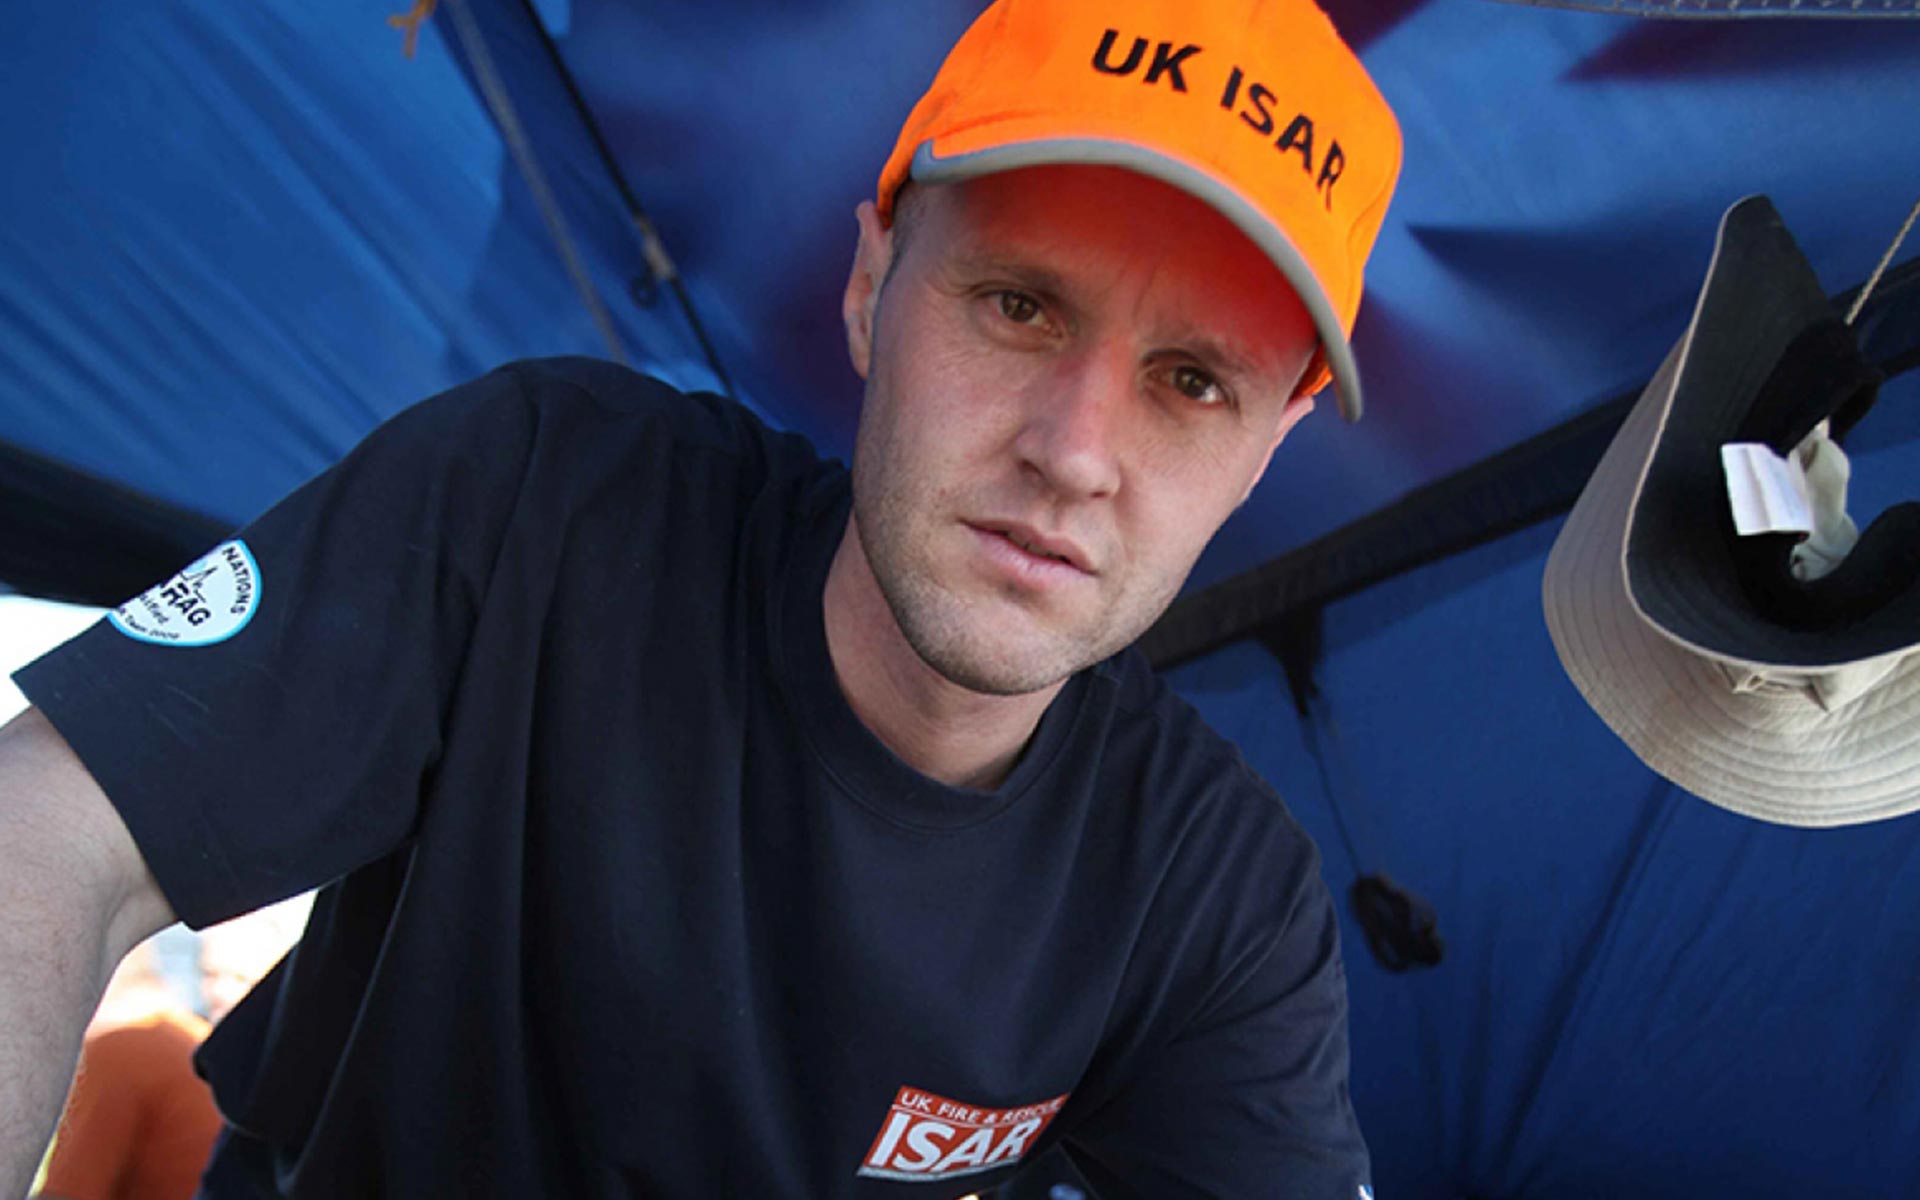 British International Search and Rescue Team - Simon Cording